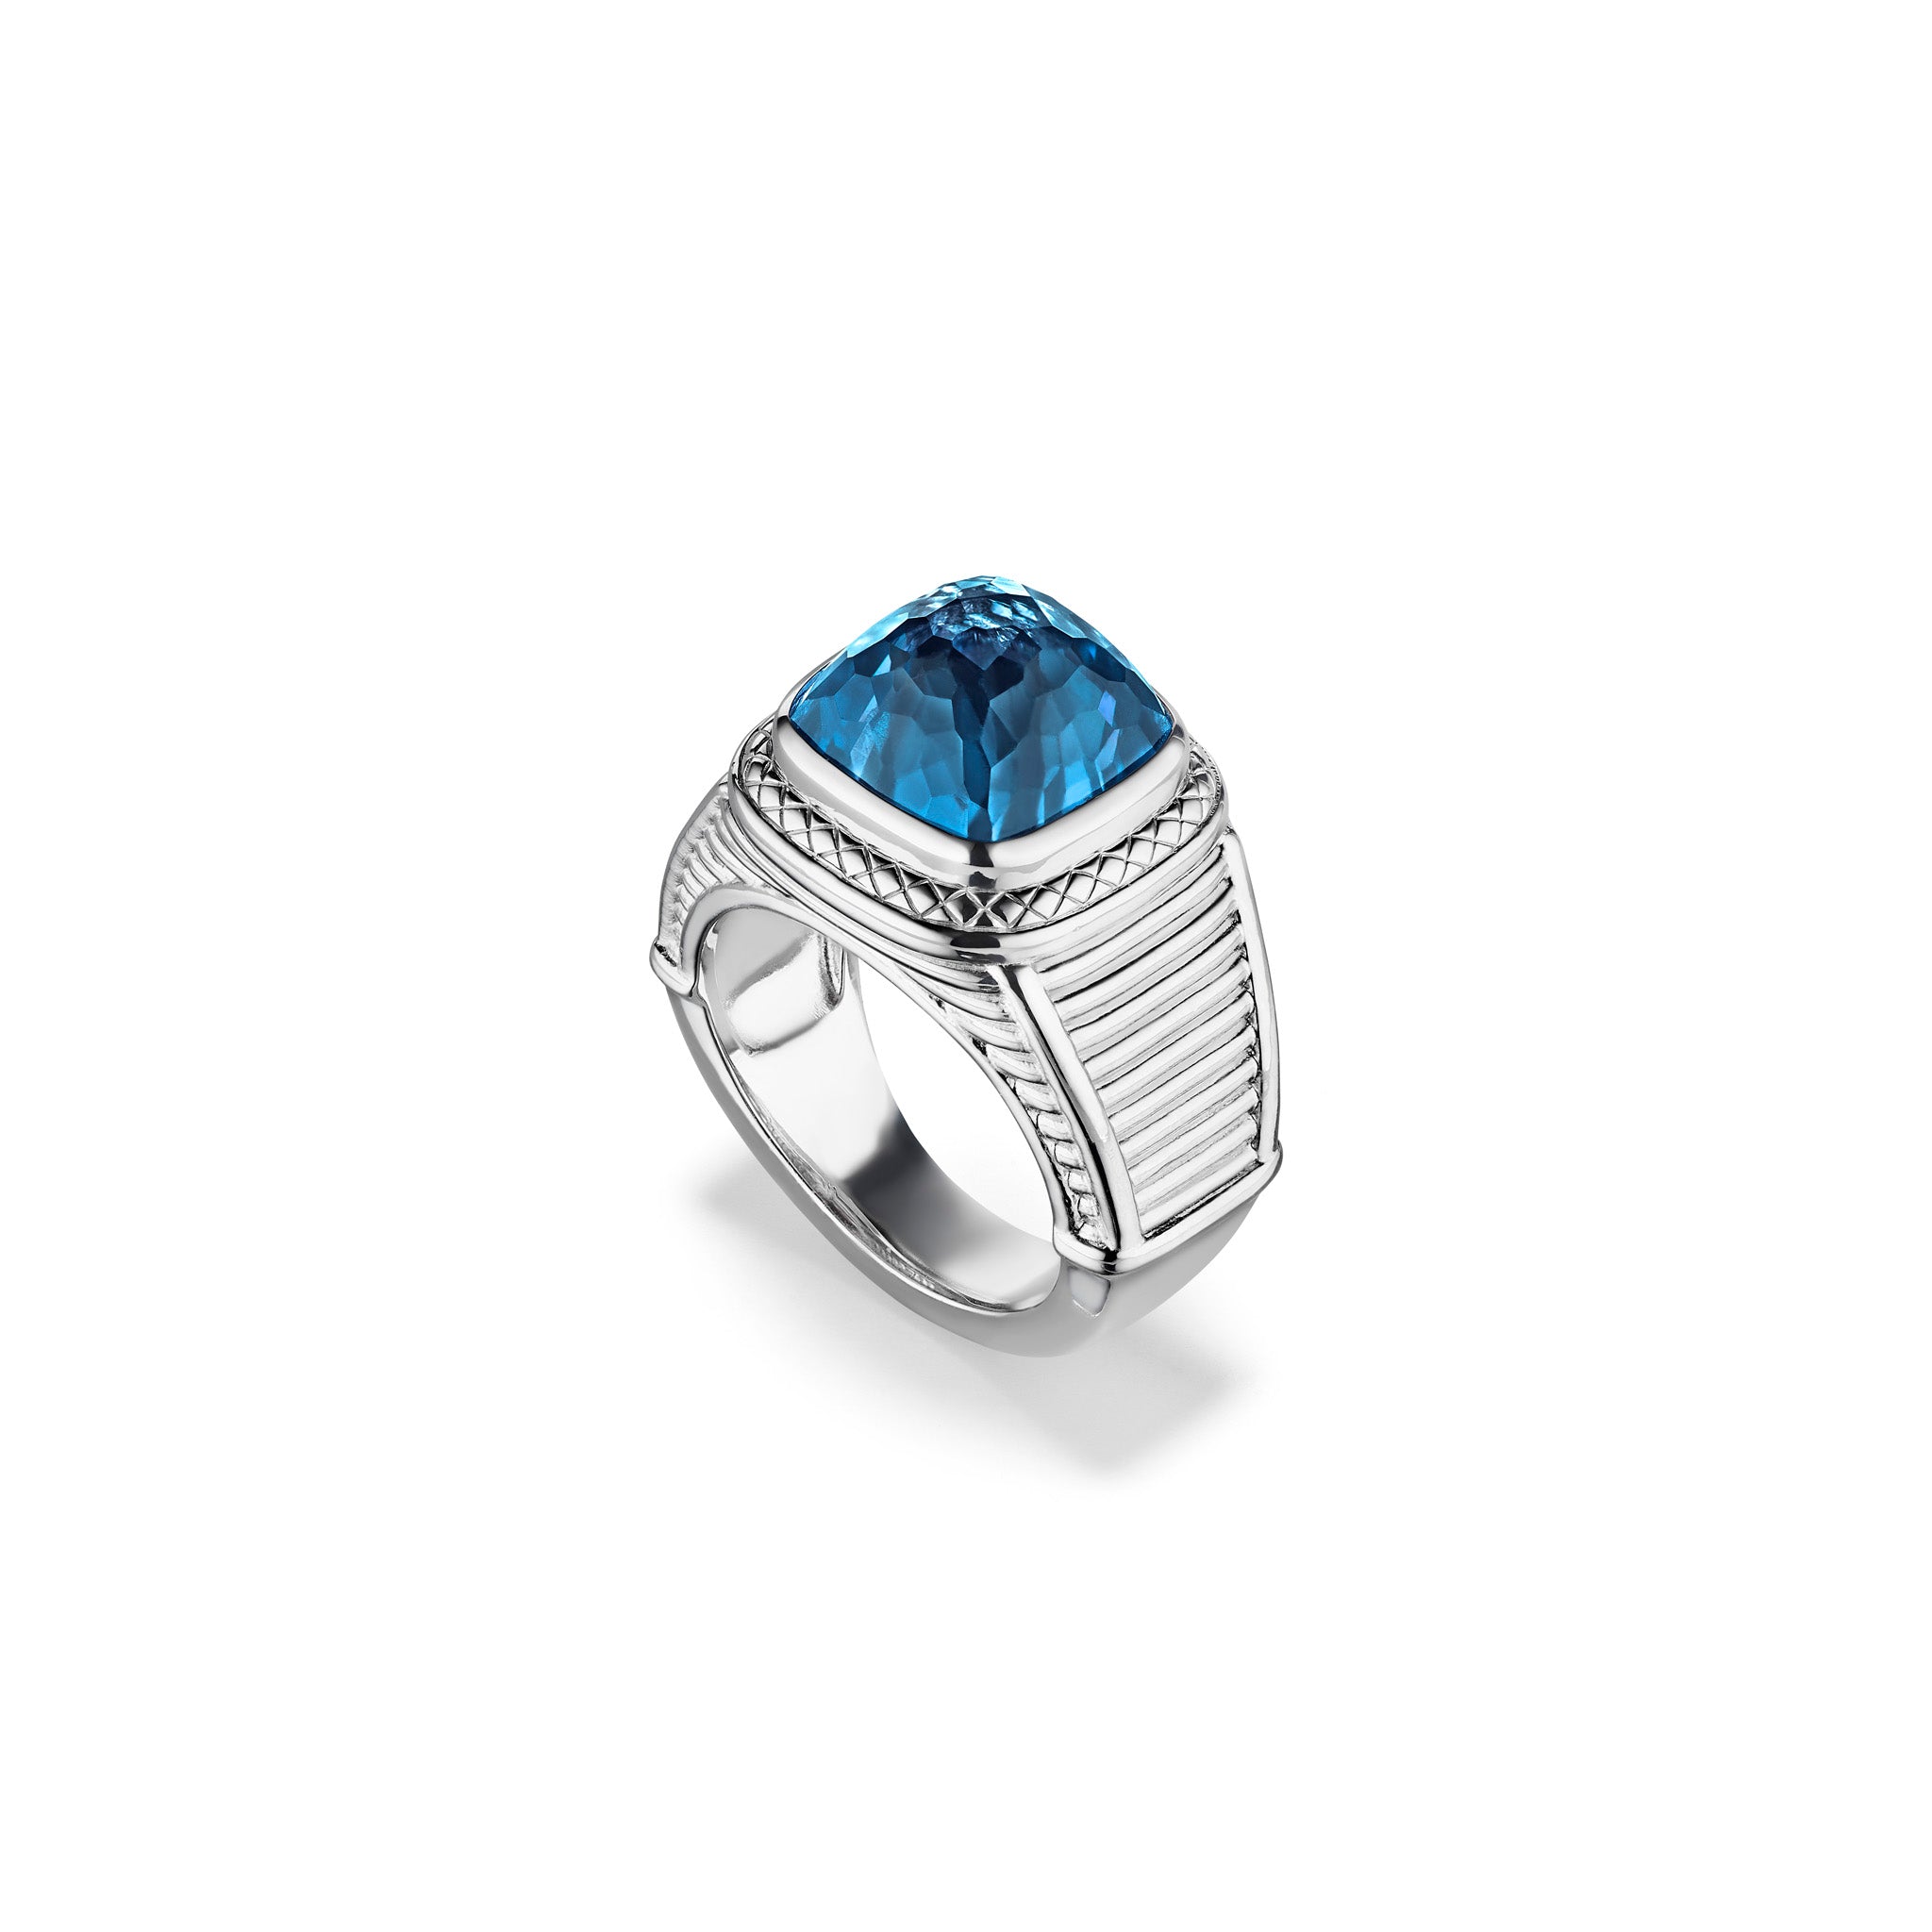 Cassandre Ring with London Blue Topaz